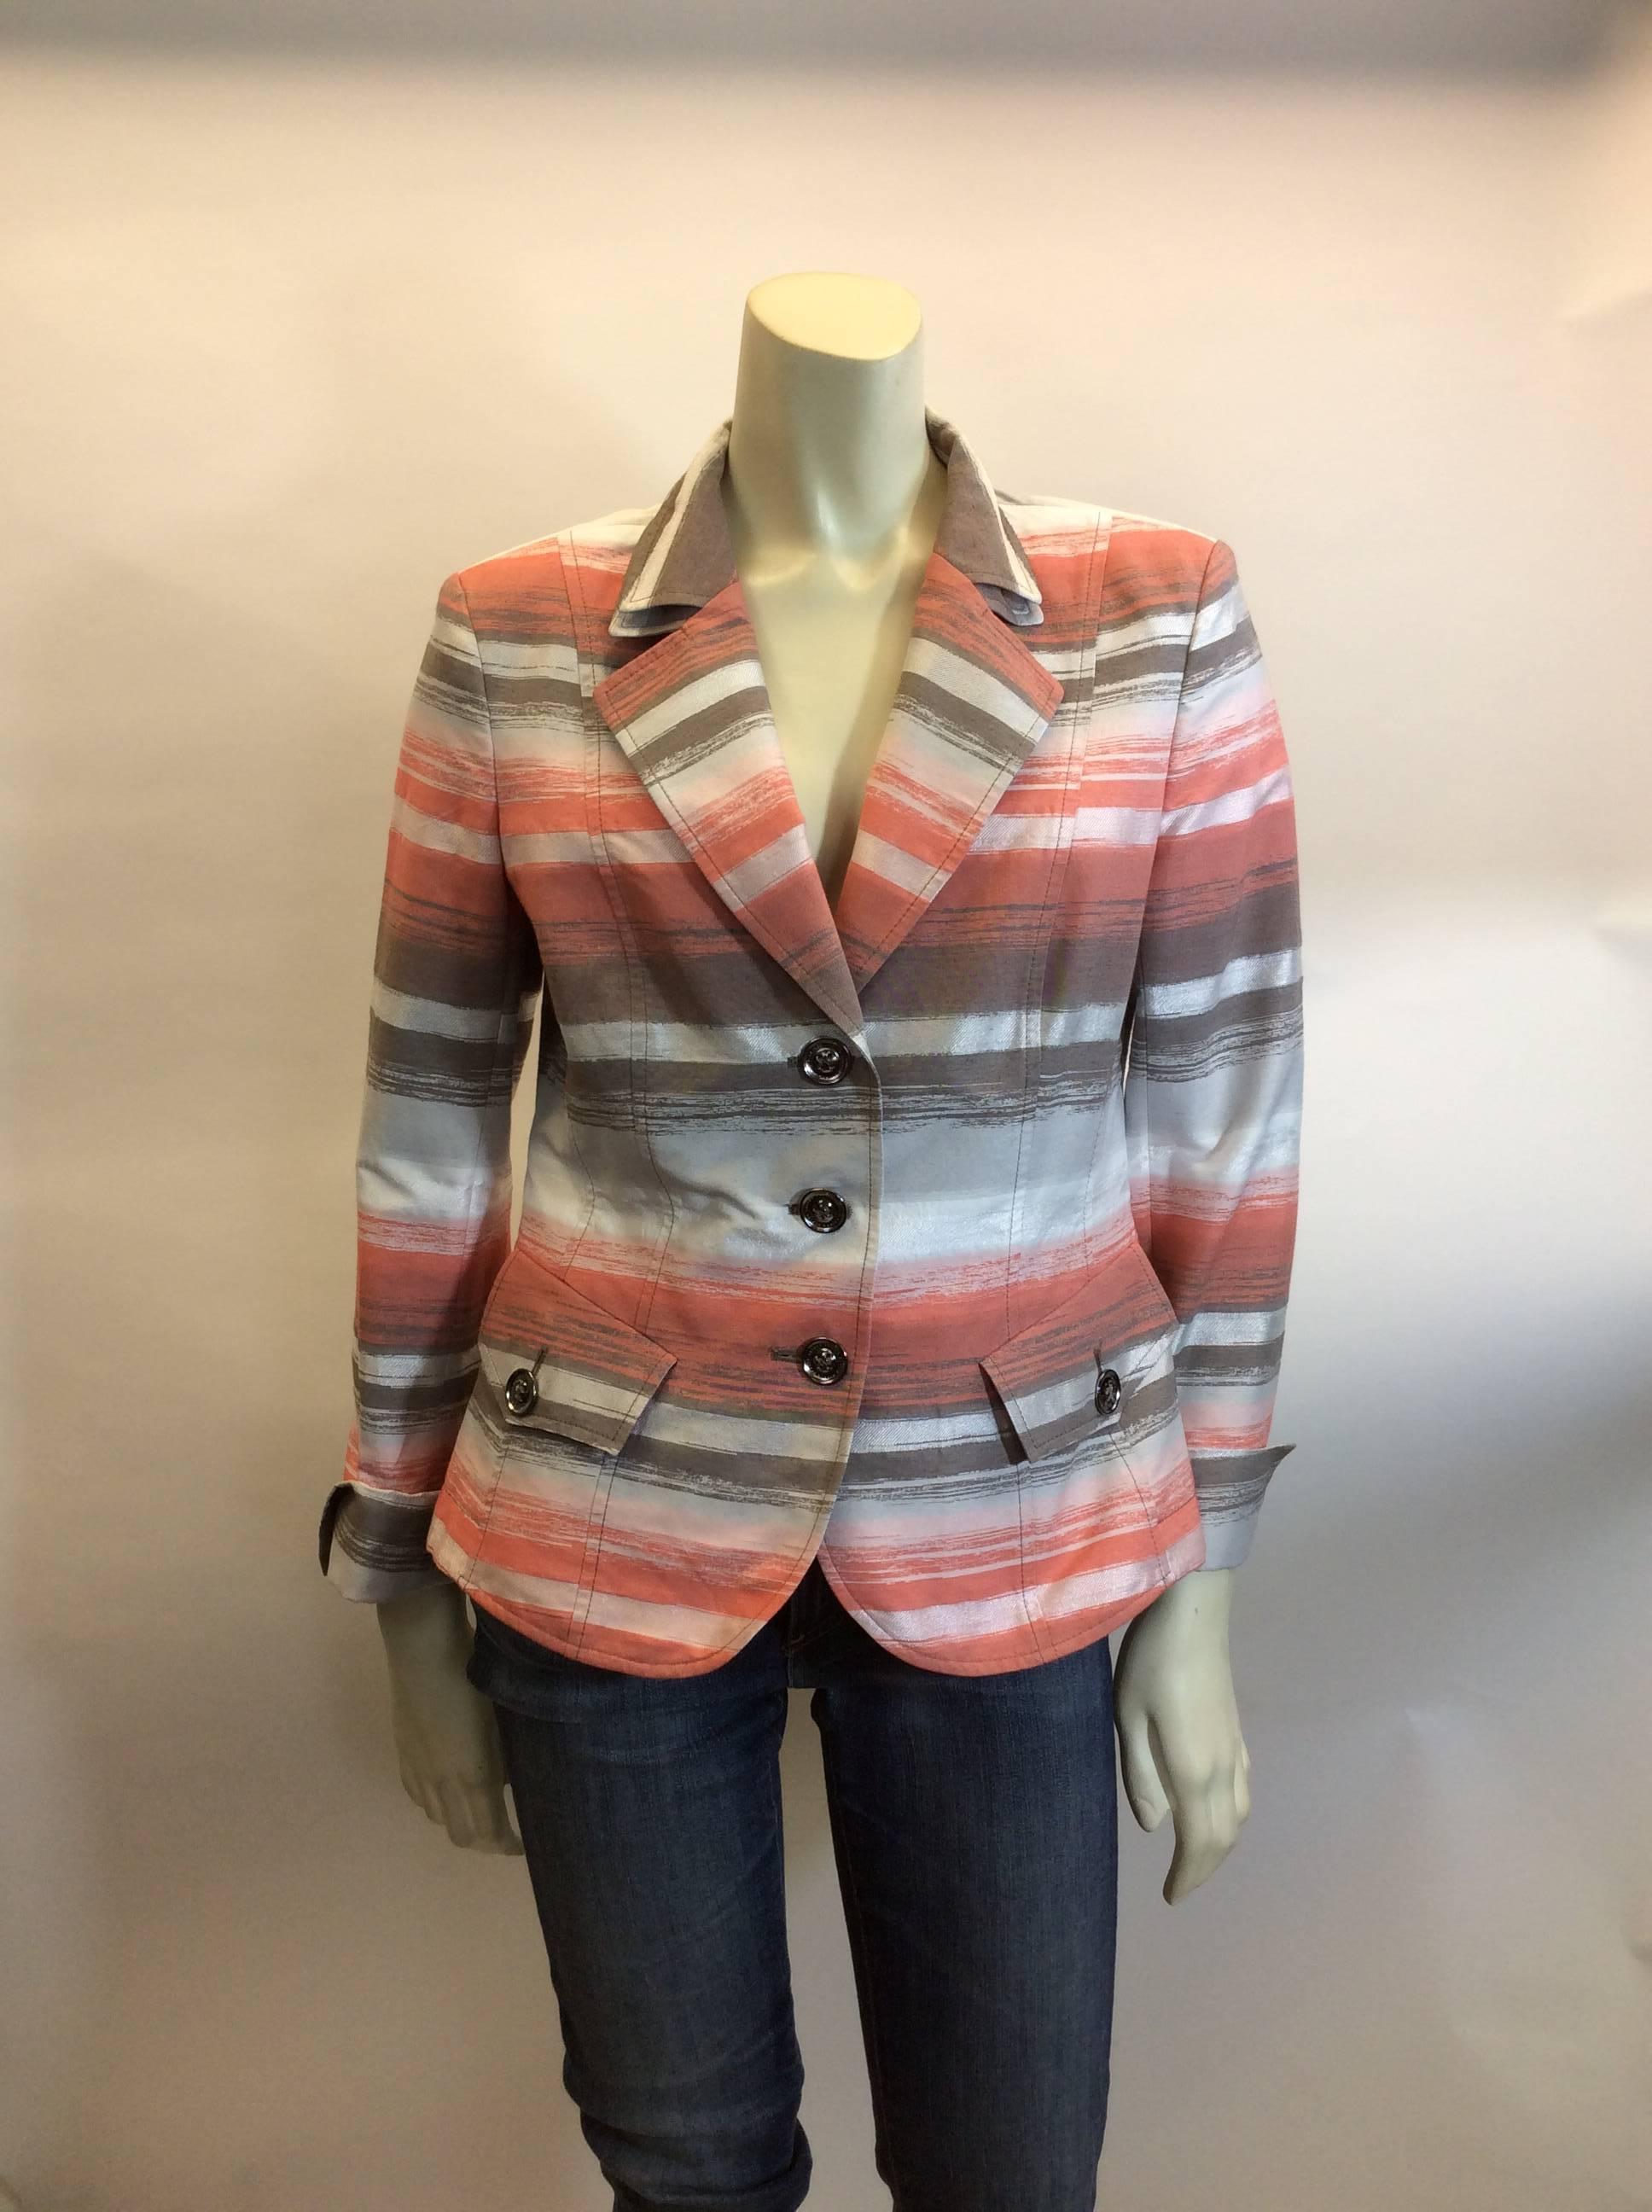 Akris Coral Stripe Blazer
$299
3 silver buttons
Double collar
2 front pockets
Size Medium
